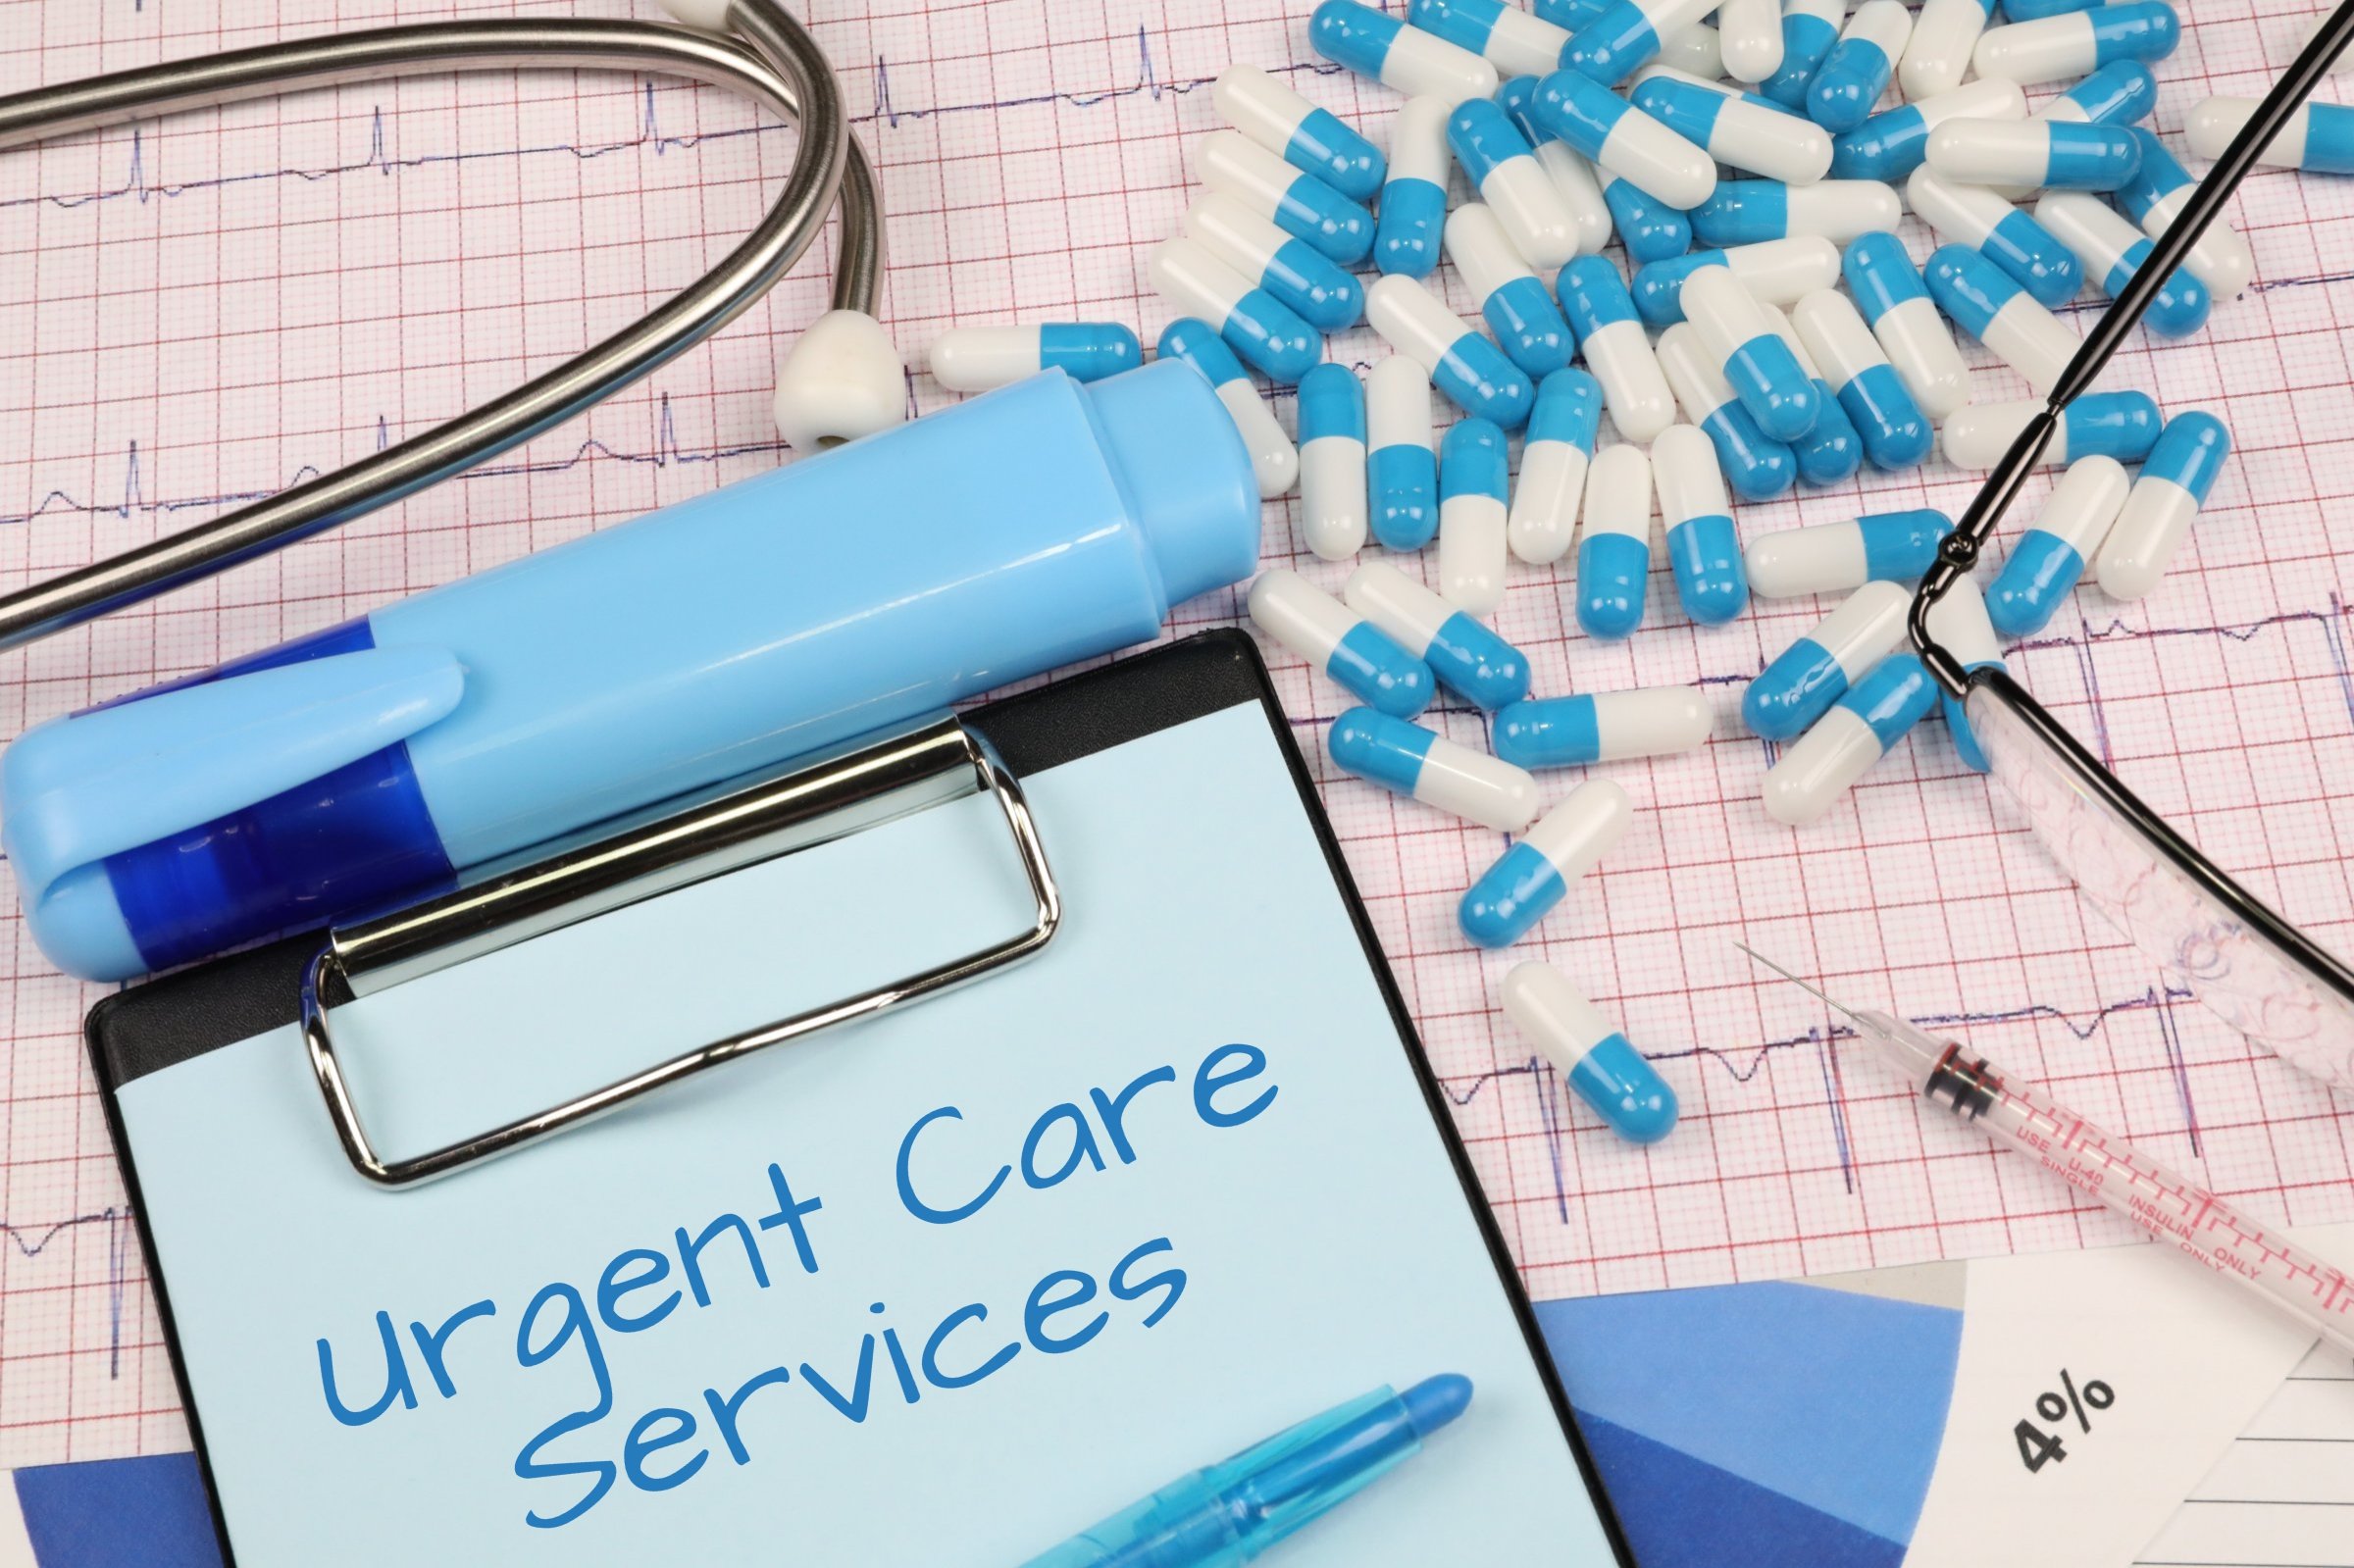 urgent care services